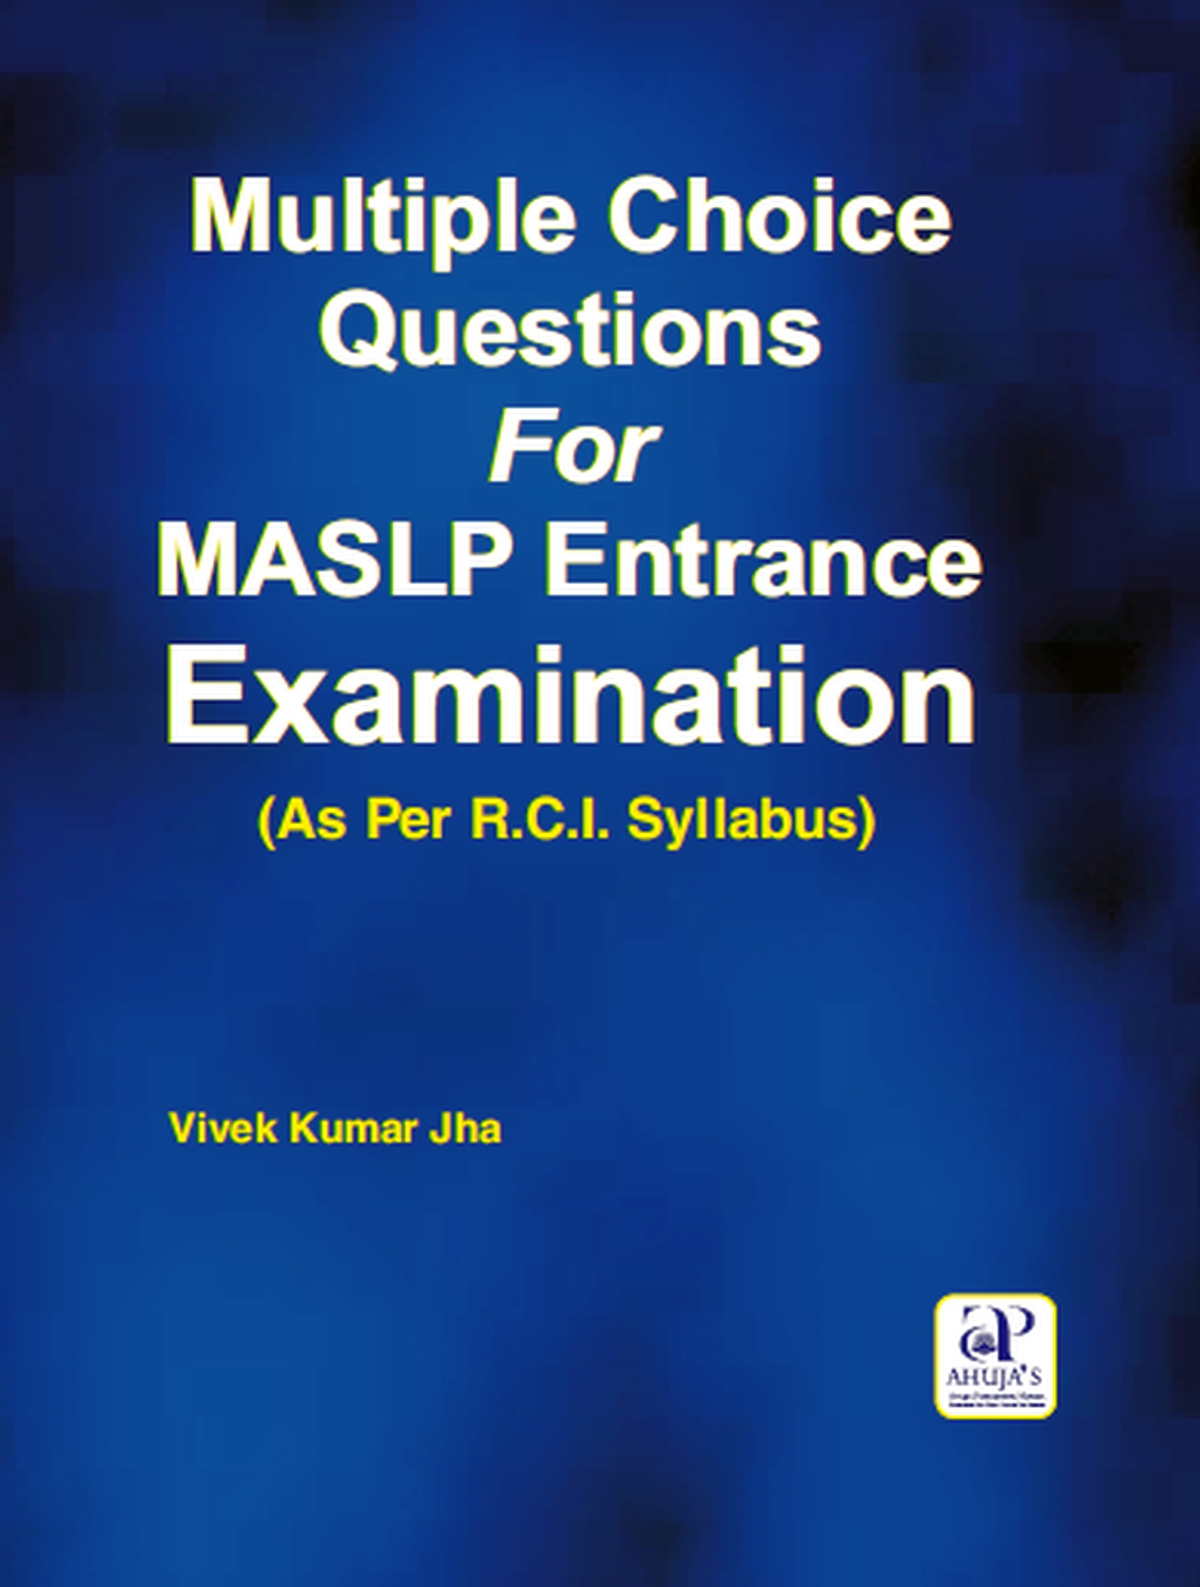 MULTIPLE CHOICE QUESTIONS FOR MASLP ENTRANCE EXAMINATION- ISBN: 9789380316857